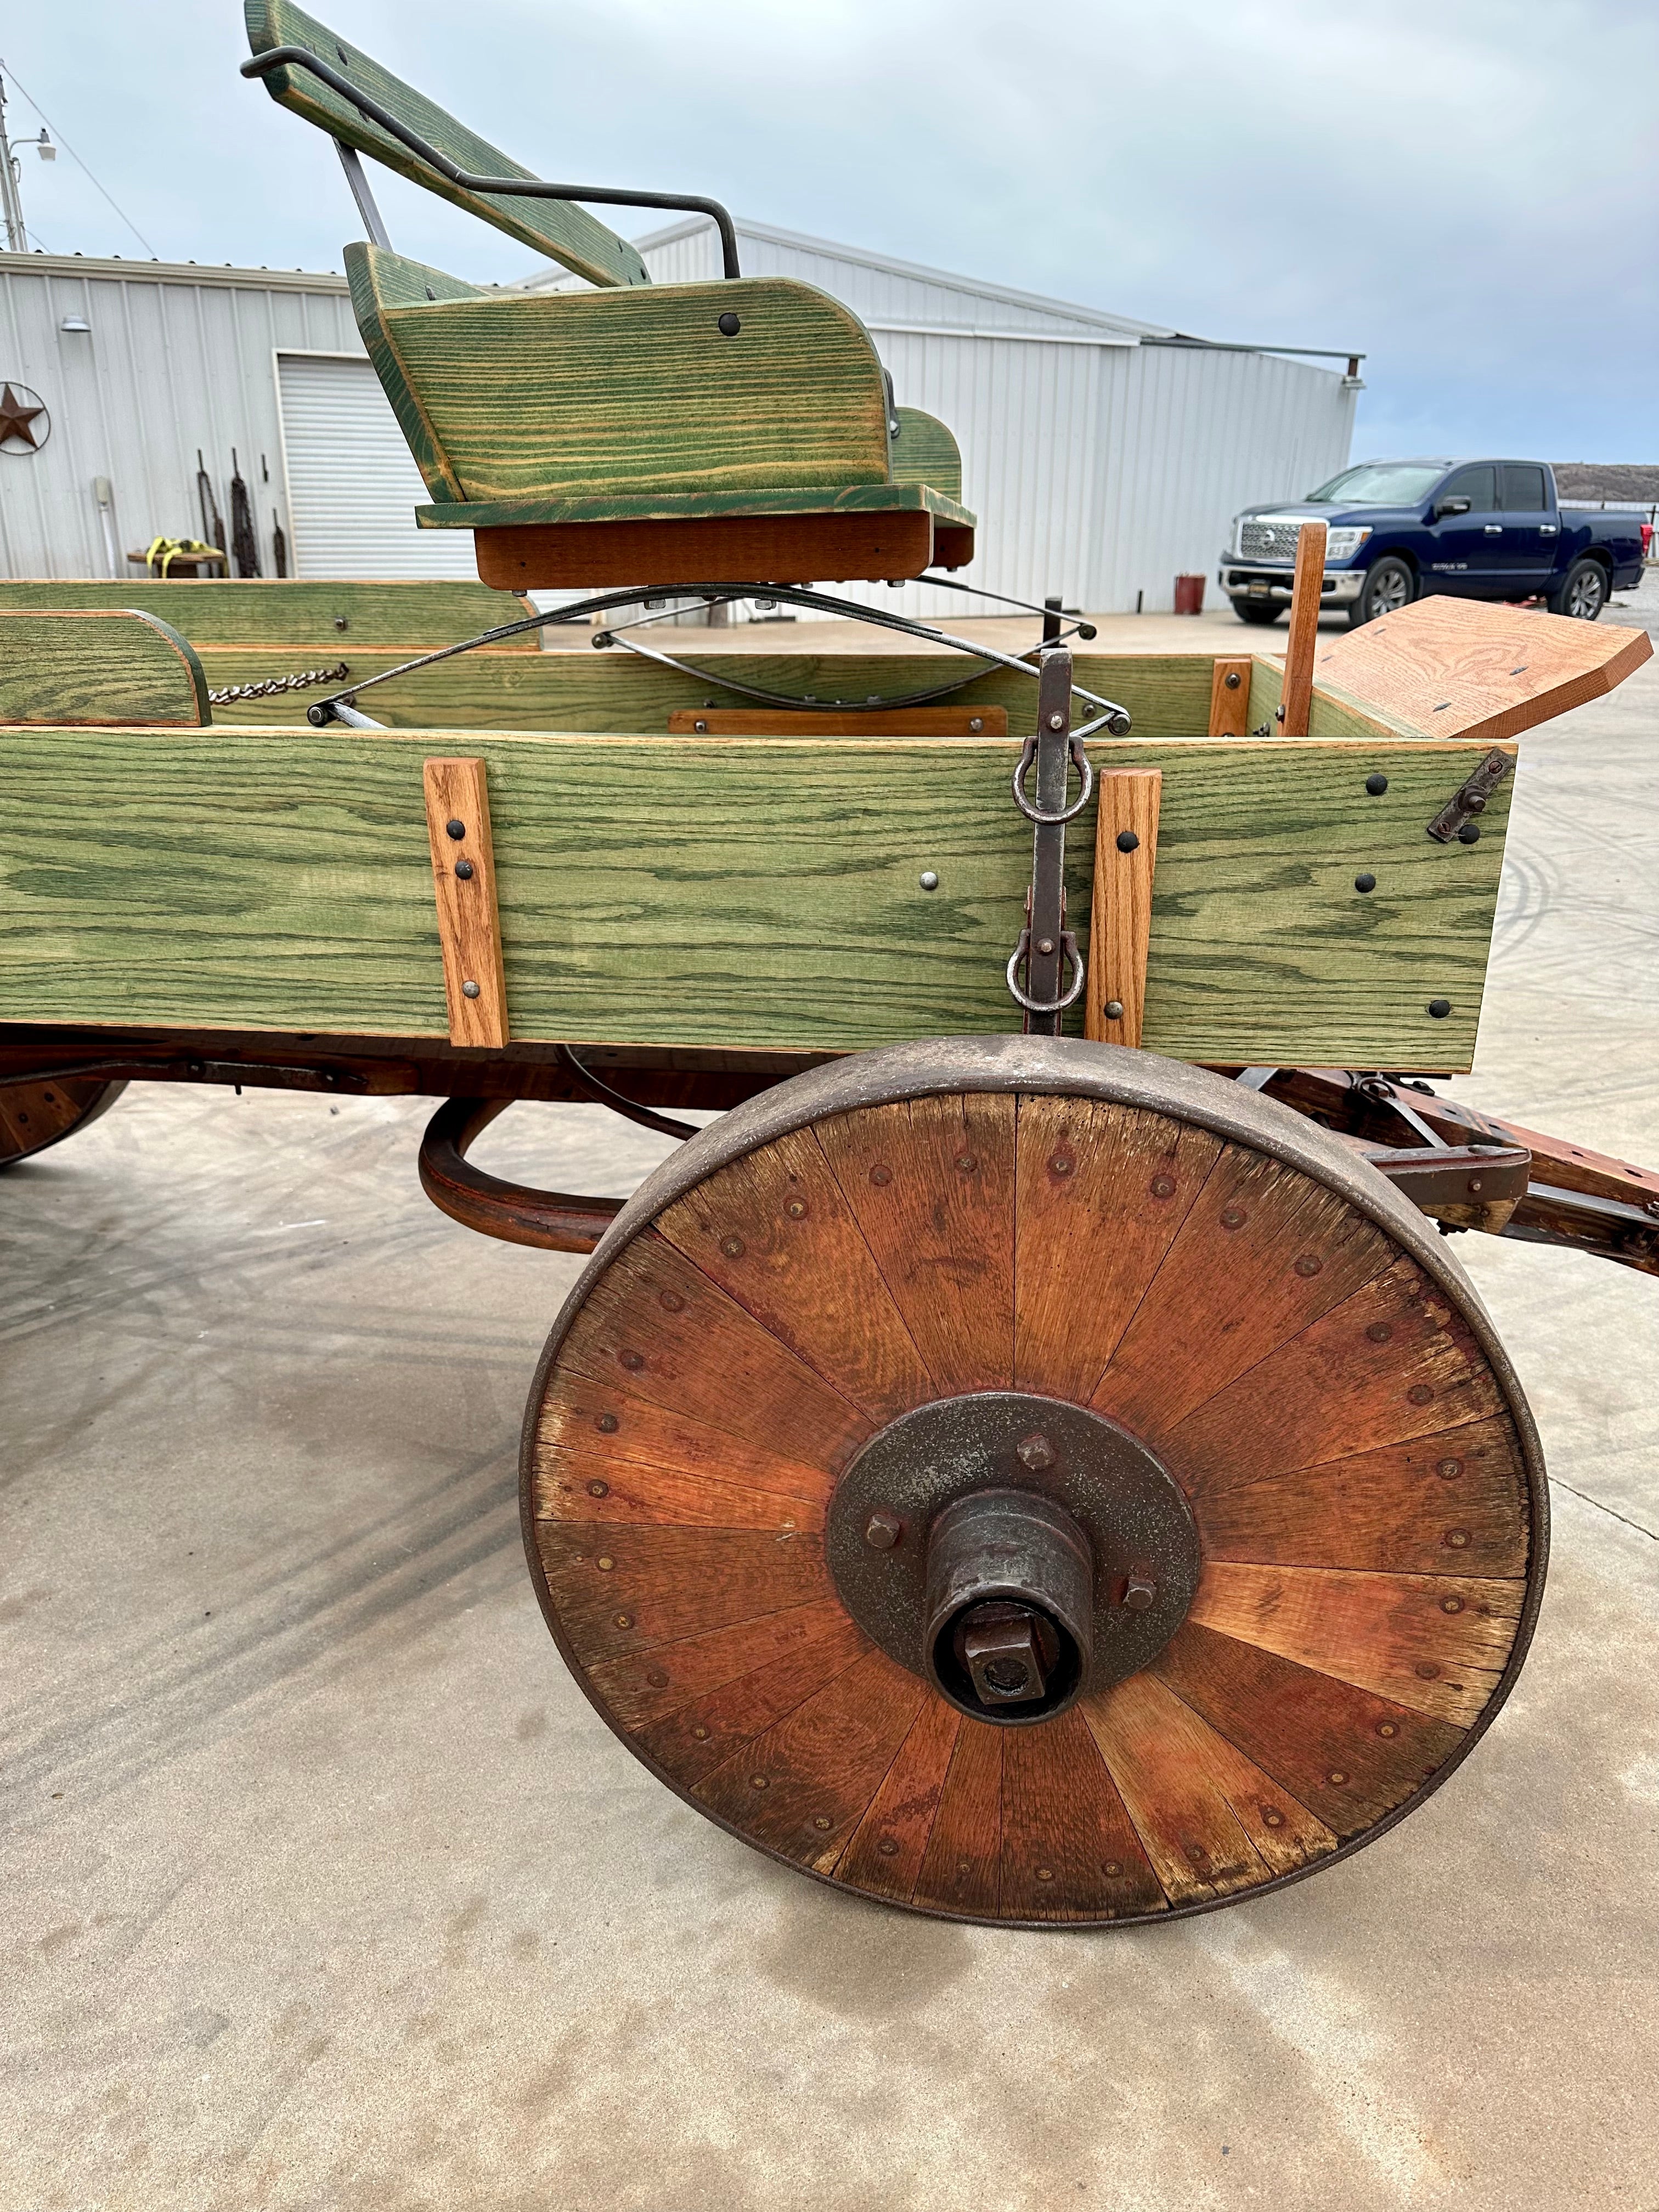 #360 Rare Solid Wood Wheel Display Wagon